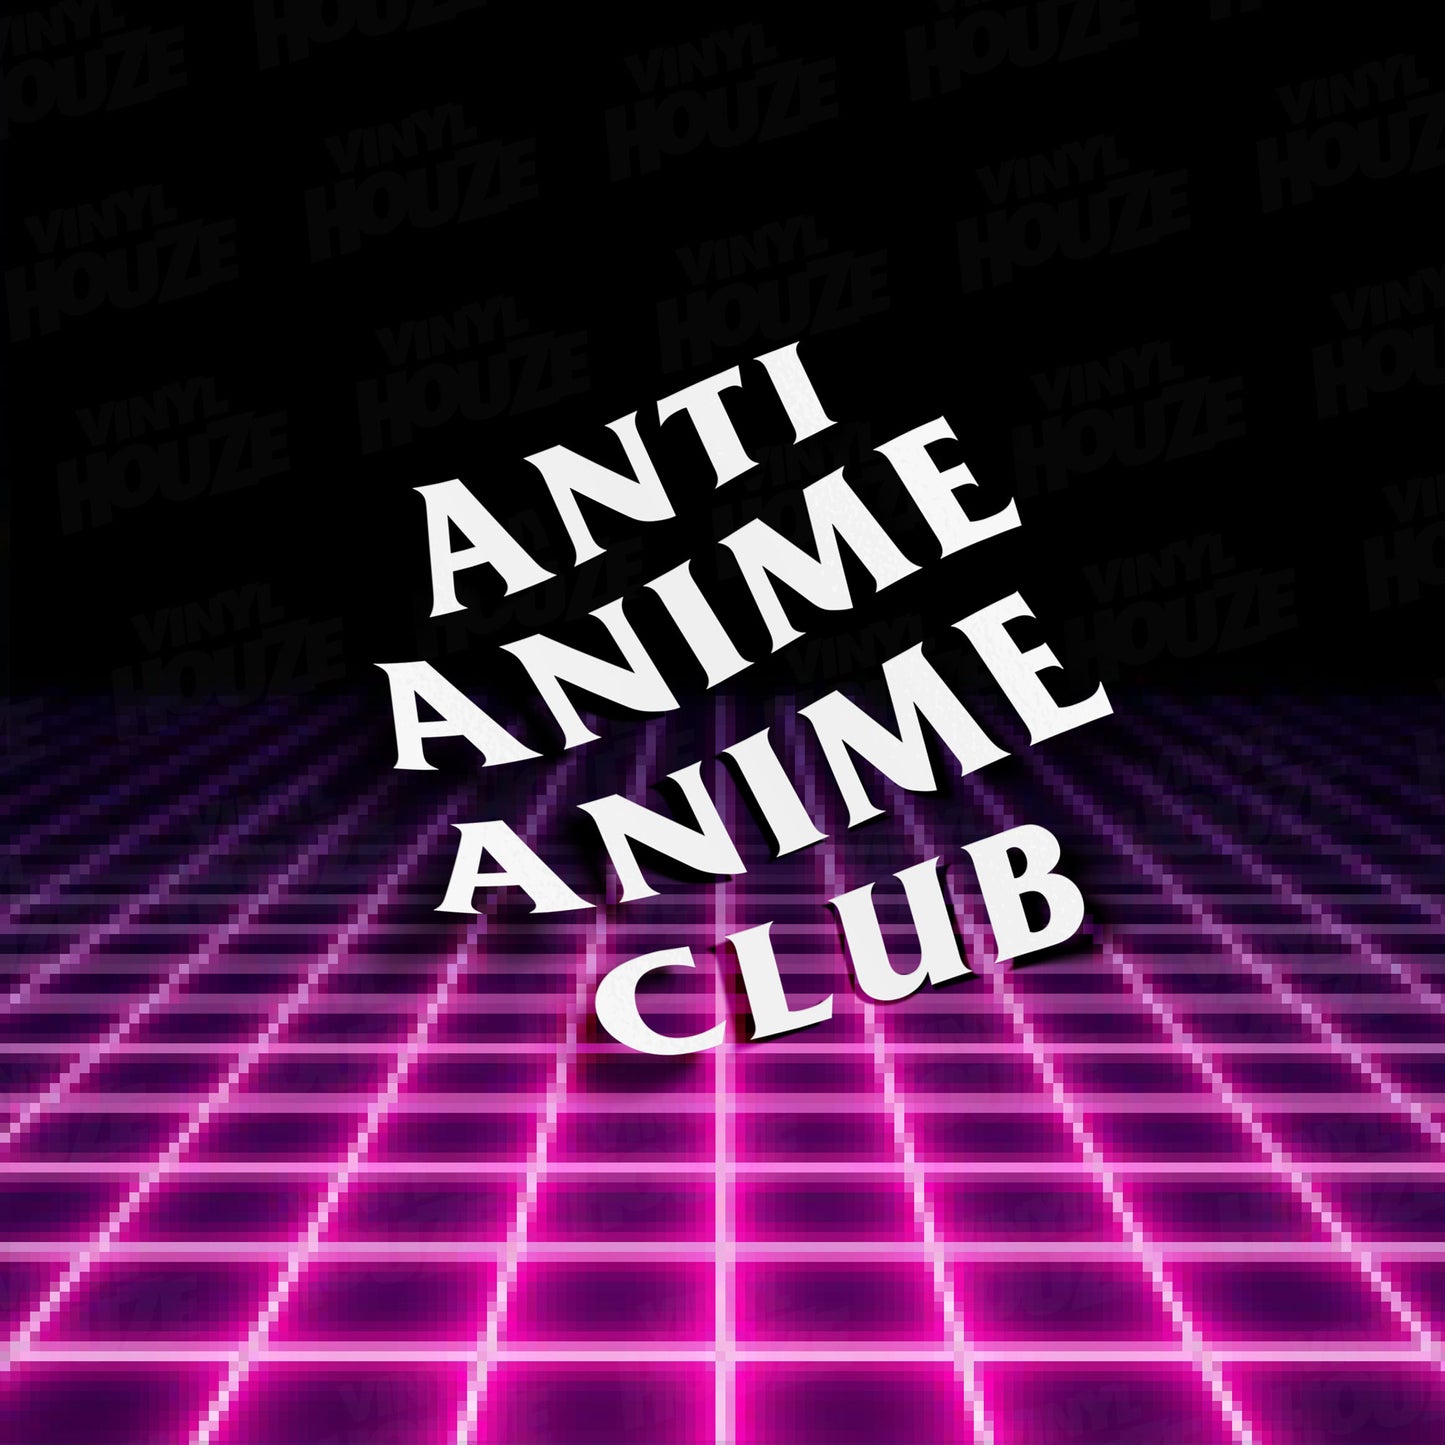 Anti Anime Anime Club - VINYL HOUZE